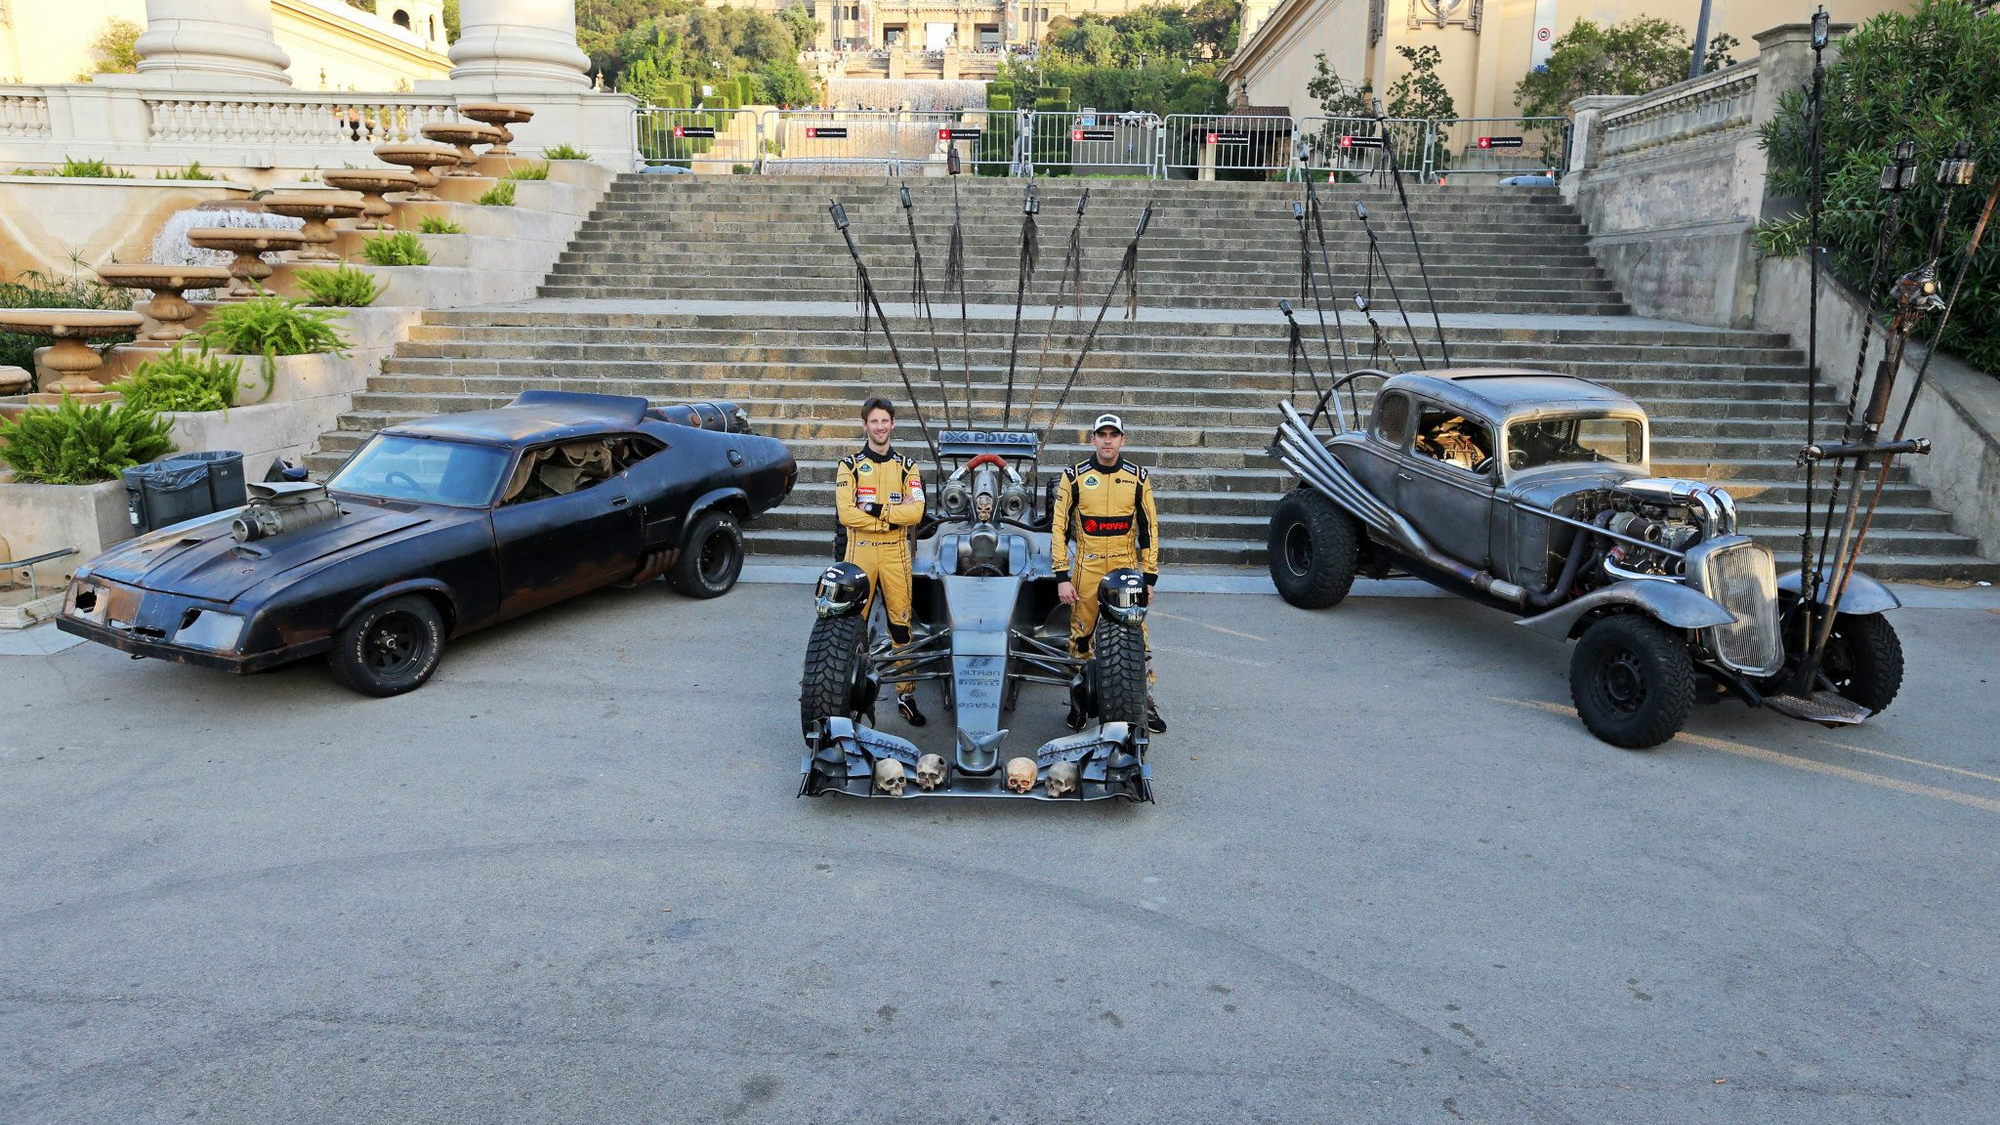 Lotus F1 Mad Max: Fury Road-themed Formula 1 car